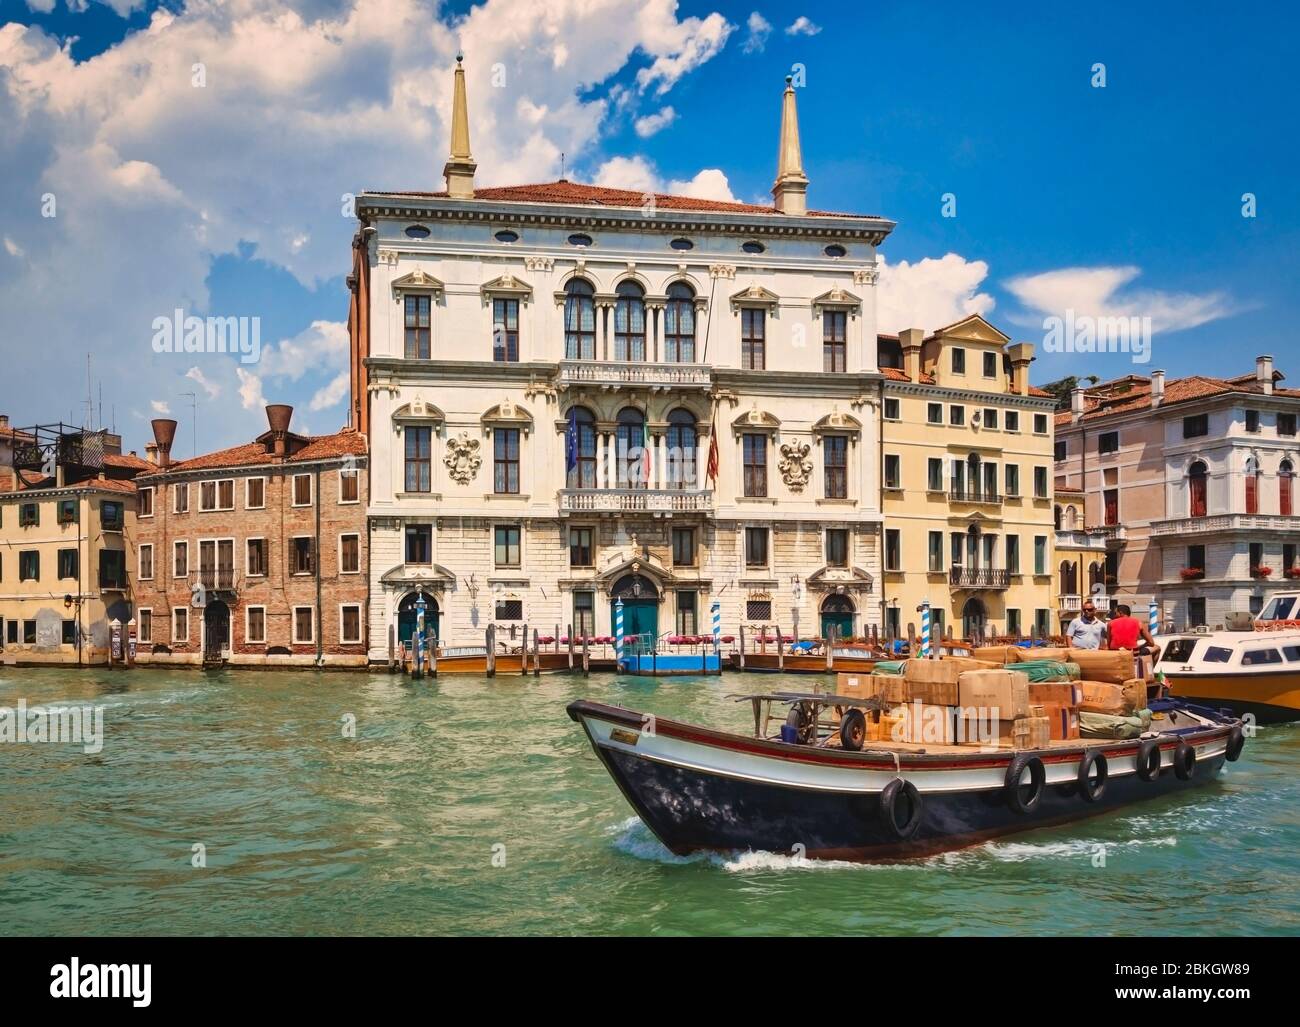 Venecia, Provincia de Venecia, Véneto, Italia. Barco que transporta mercancías en el Gran Canal. Foto de stock